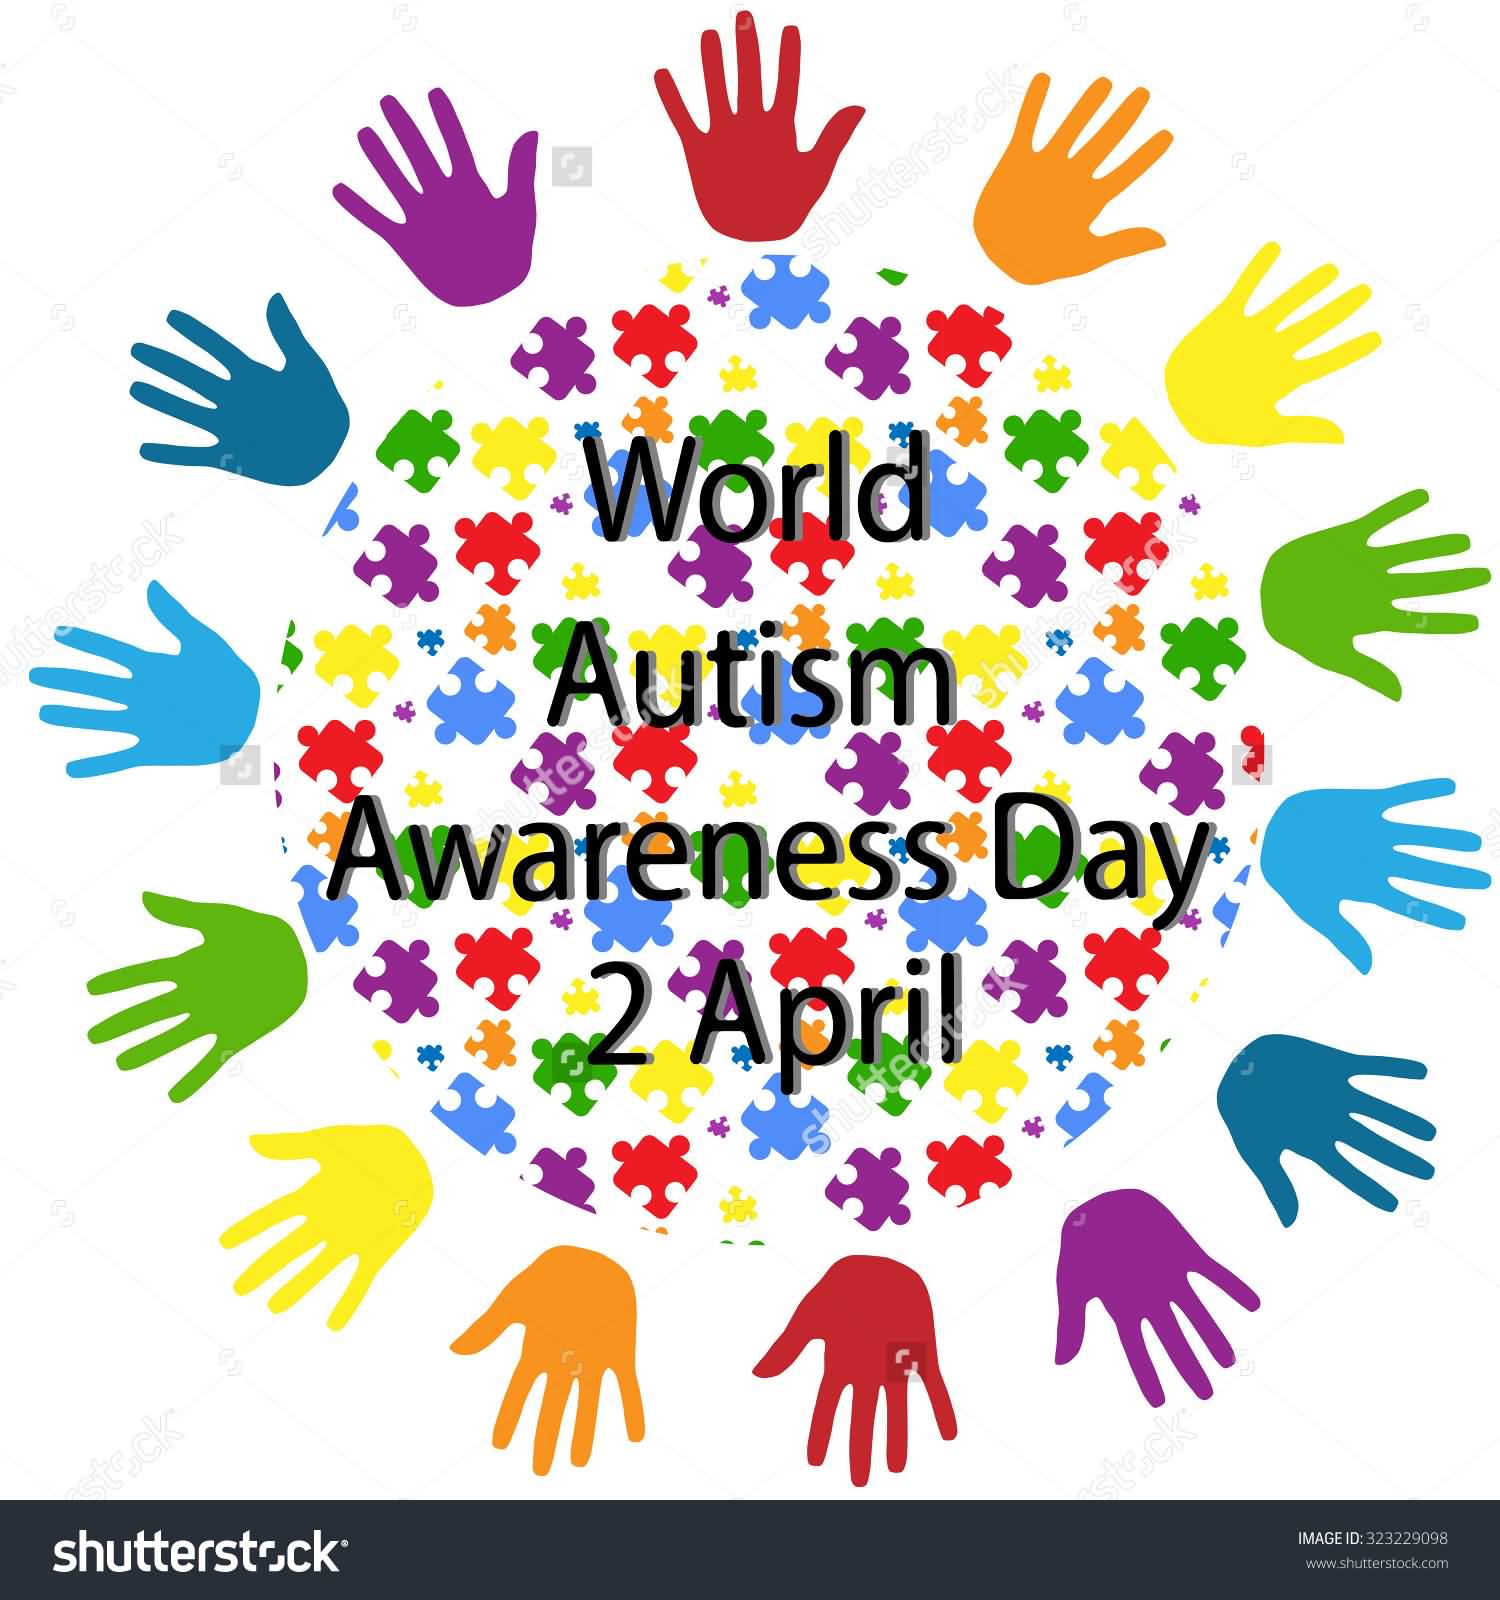 World Autism Awareness Day 2 April Colorful Hand Prints Illustration